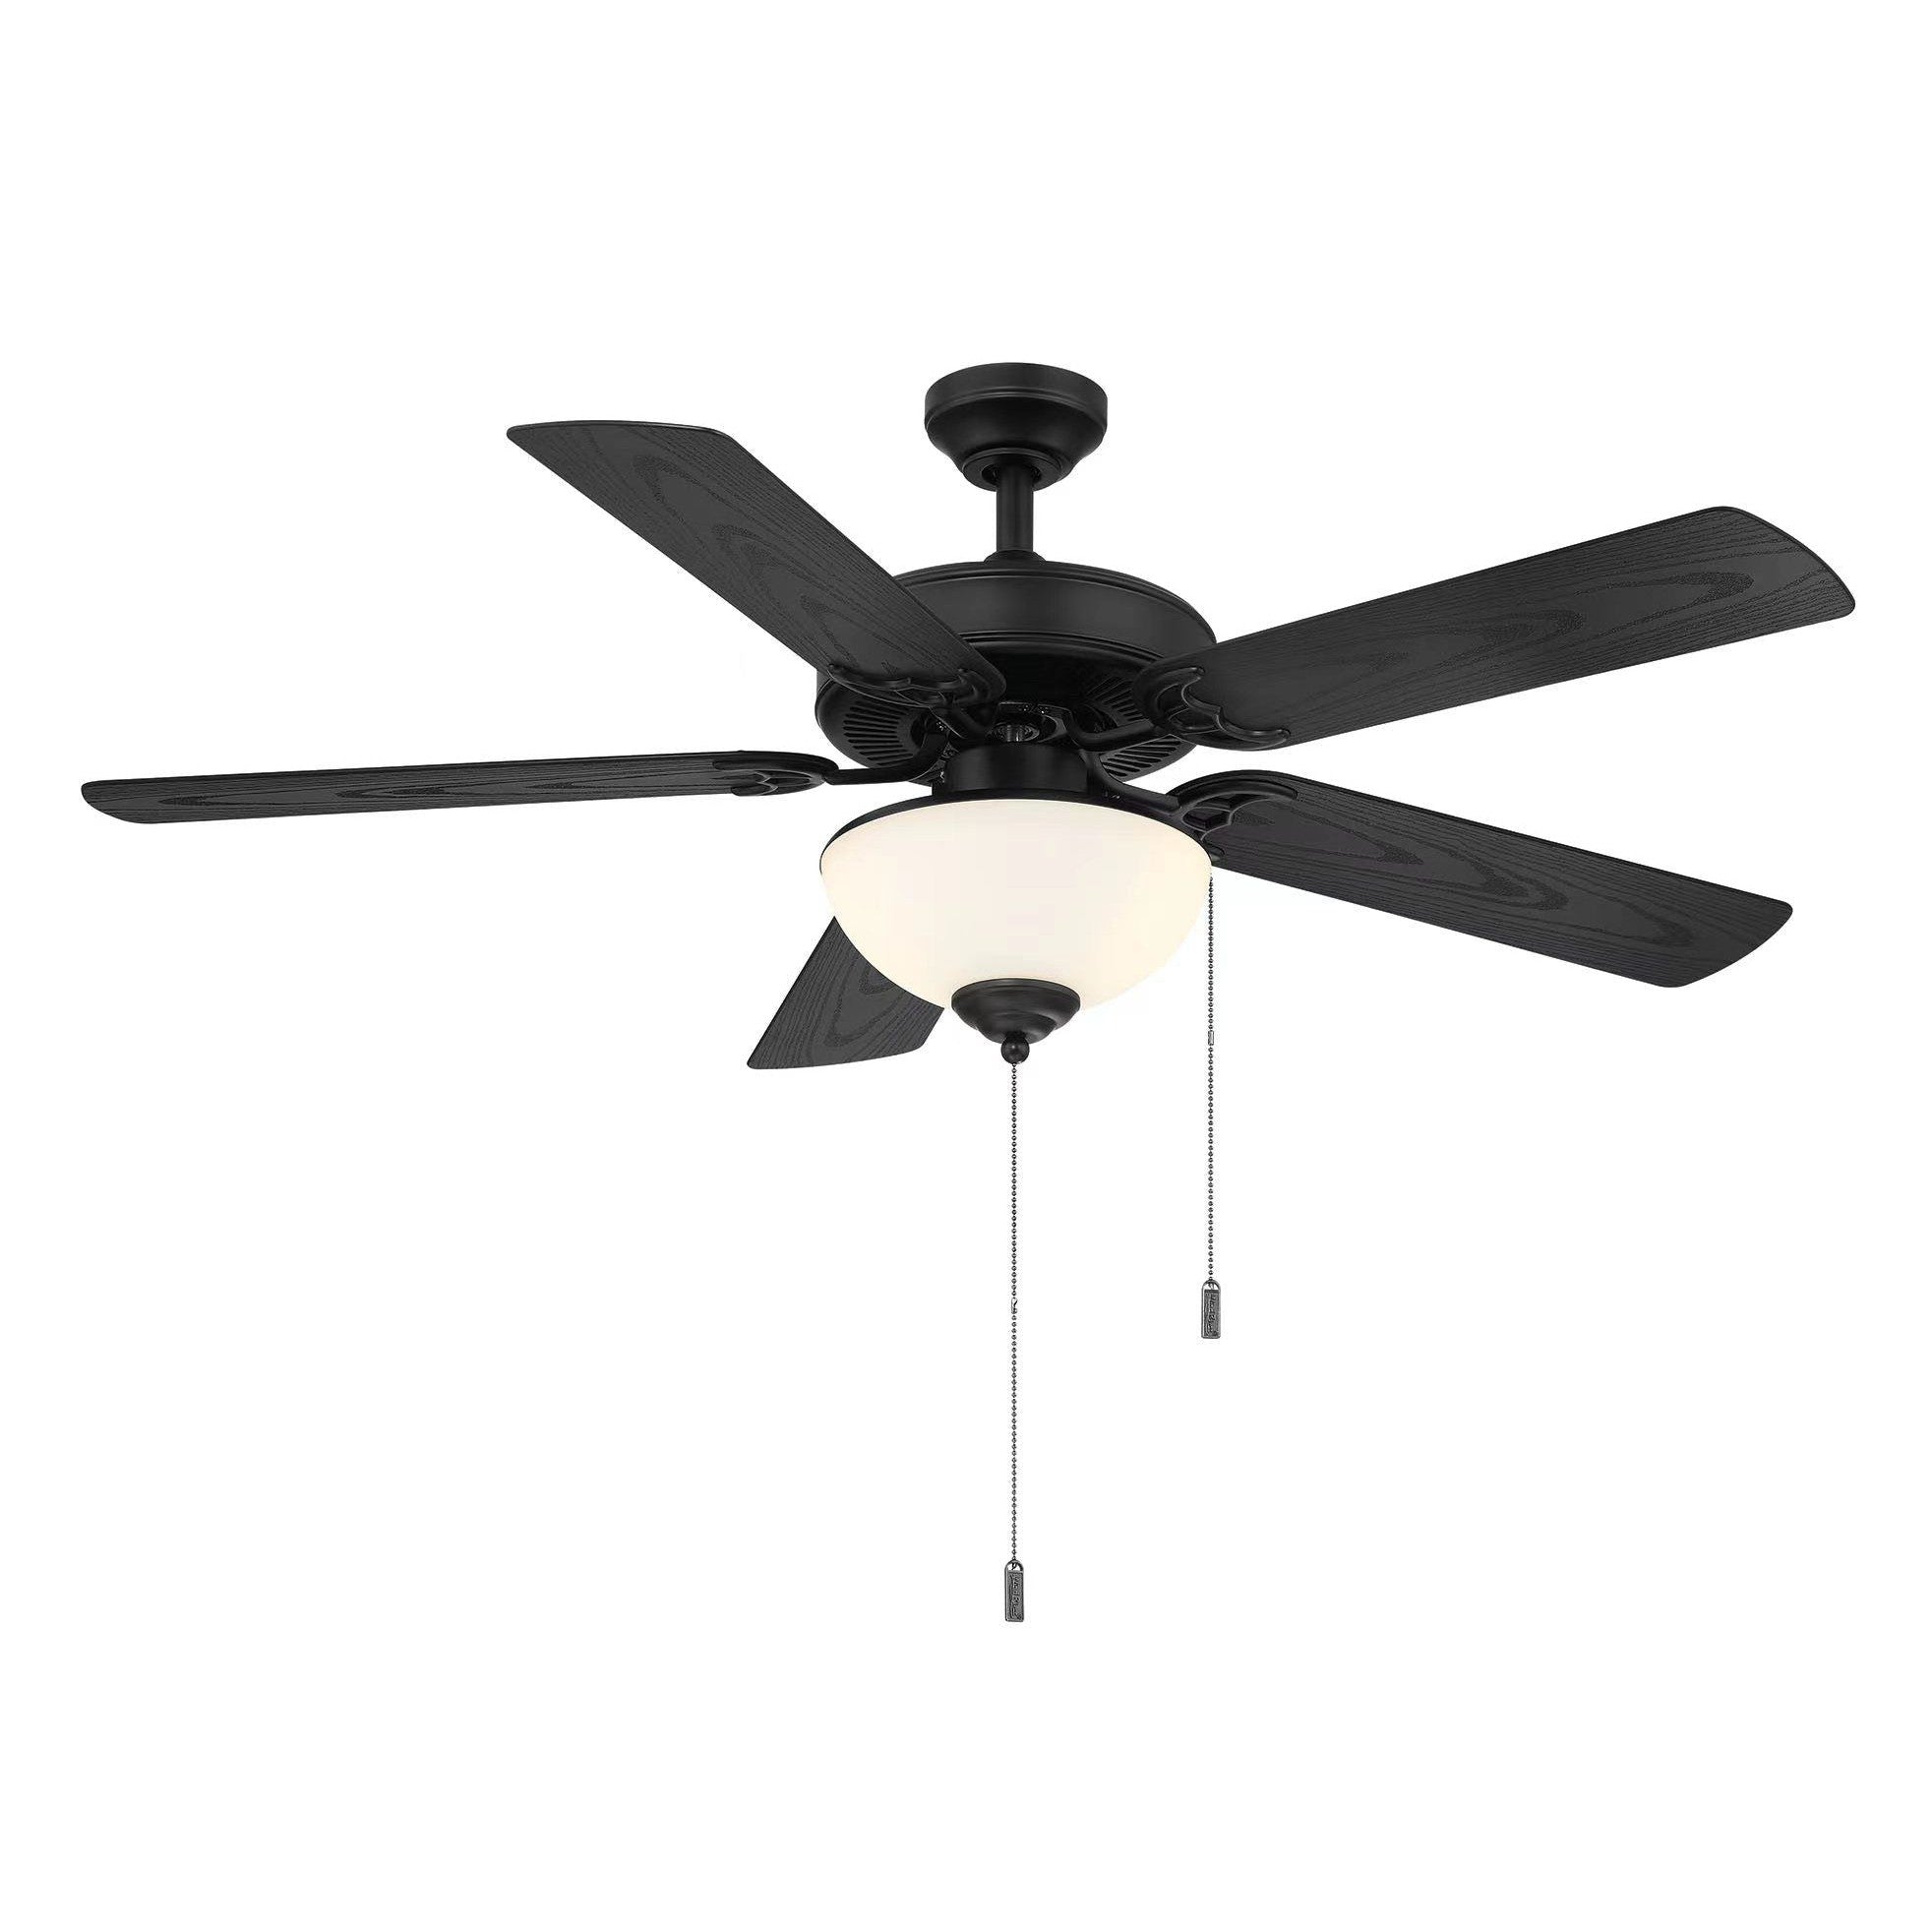 Dalton 52 inch indoor/outdoor ceiling fan w/Light Kit - Image 1